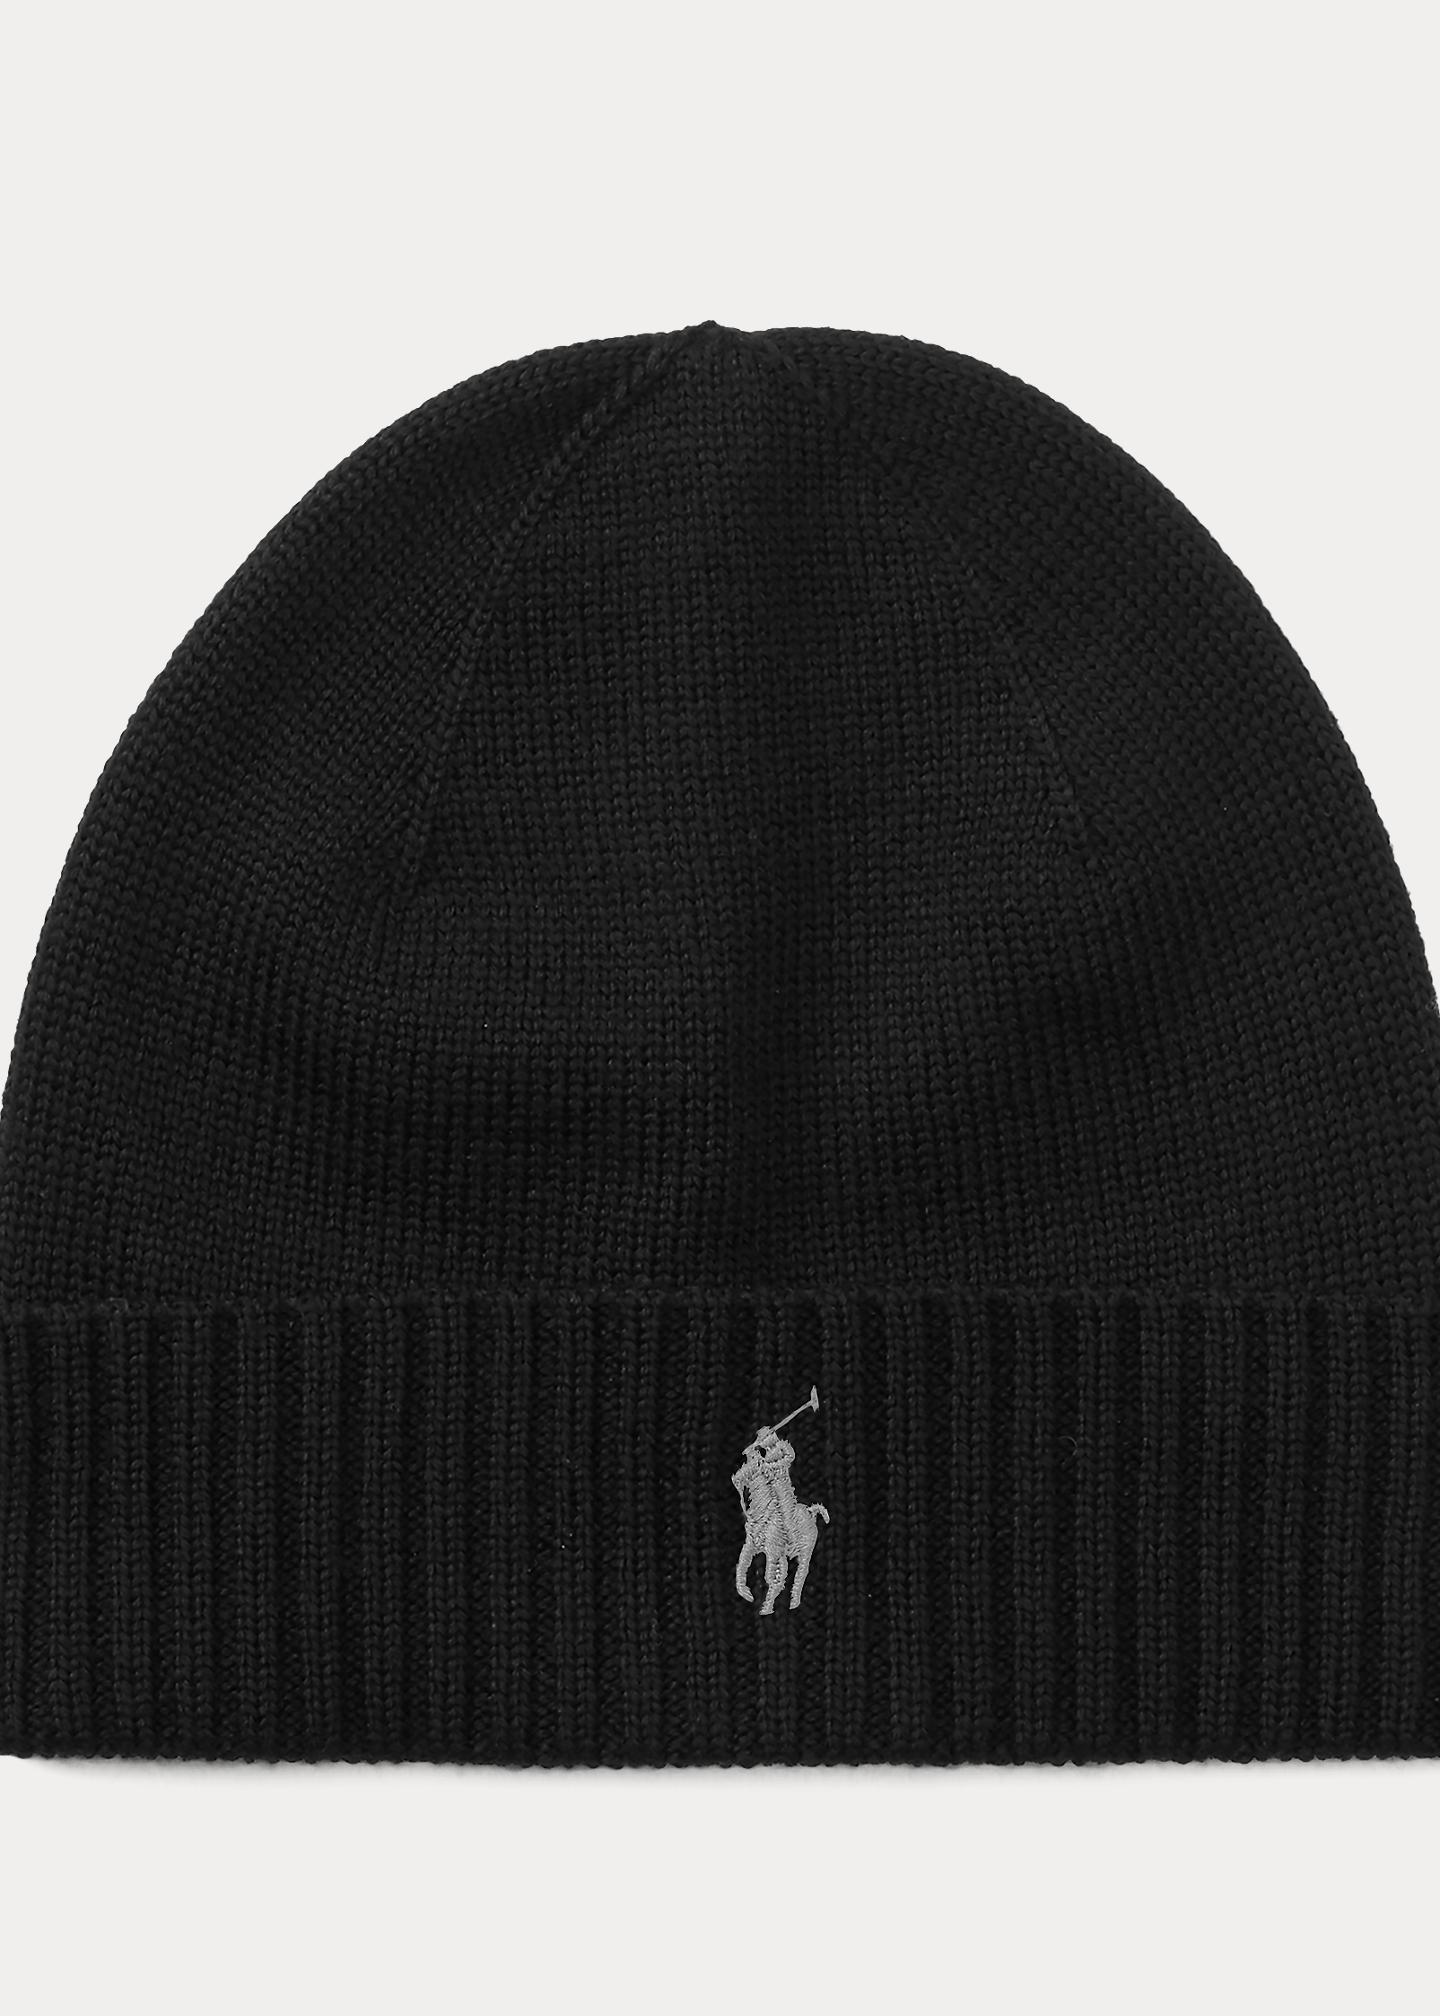 Polo Ralph Lauren Wool Signature Pony Hat in Black for Men - Lyst